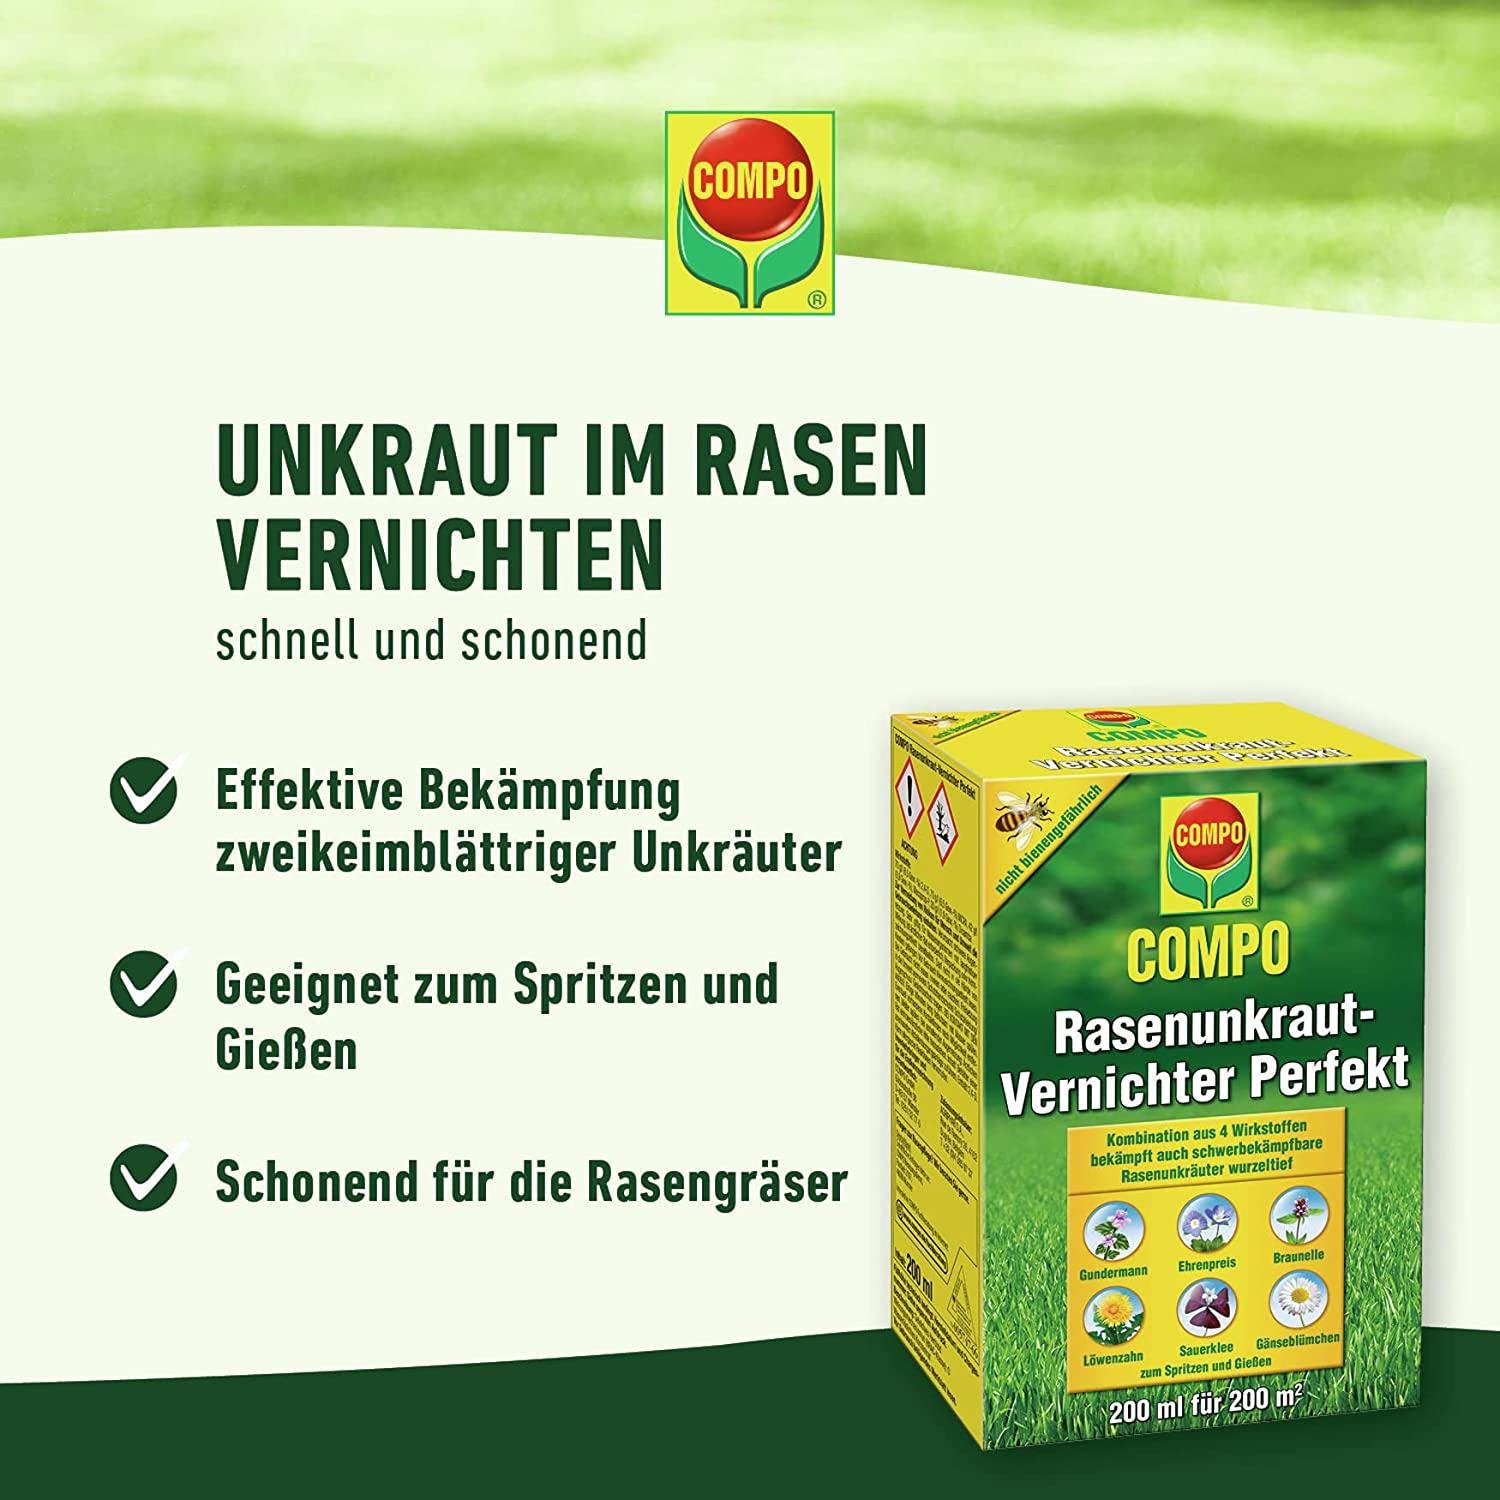 COMPO Rasenunkraut-Vernichter Perfekt 200 ml für 200 m²